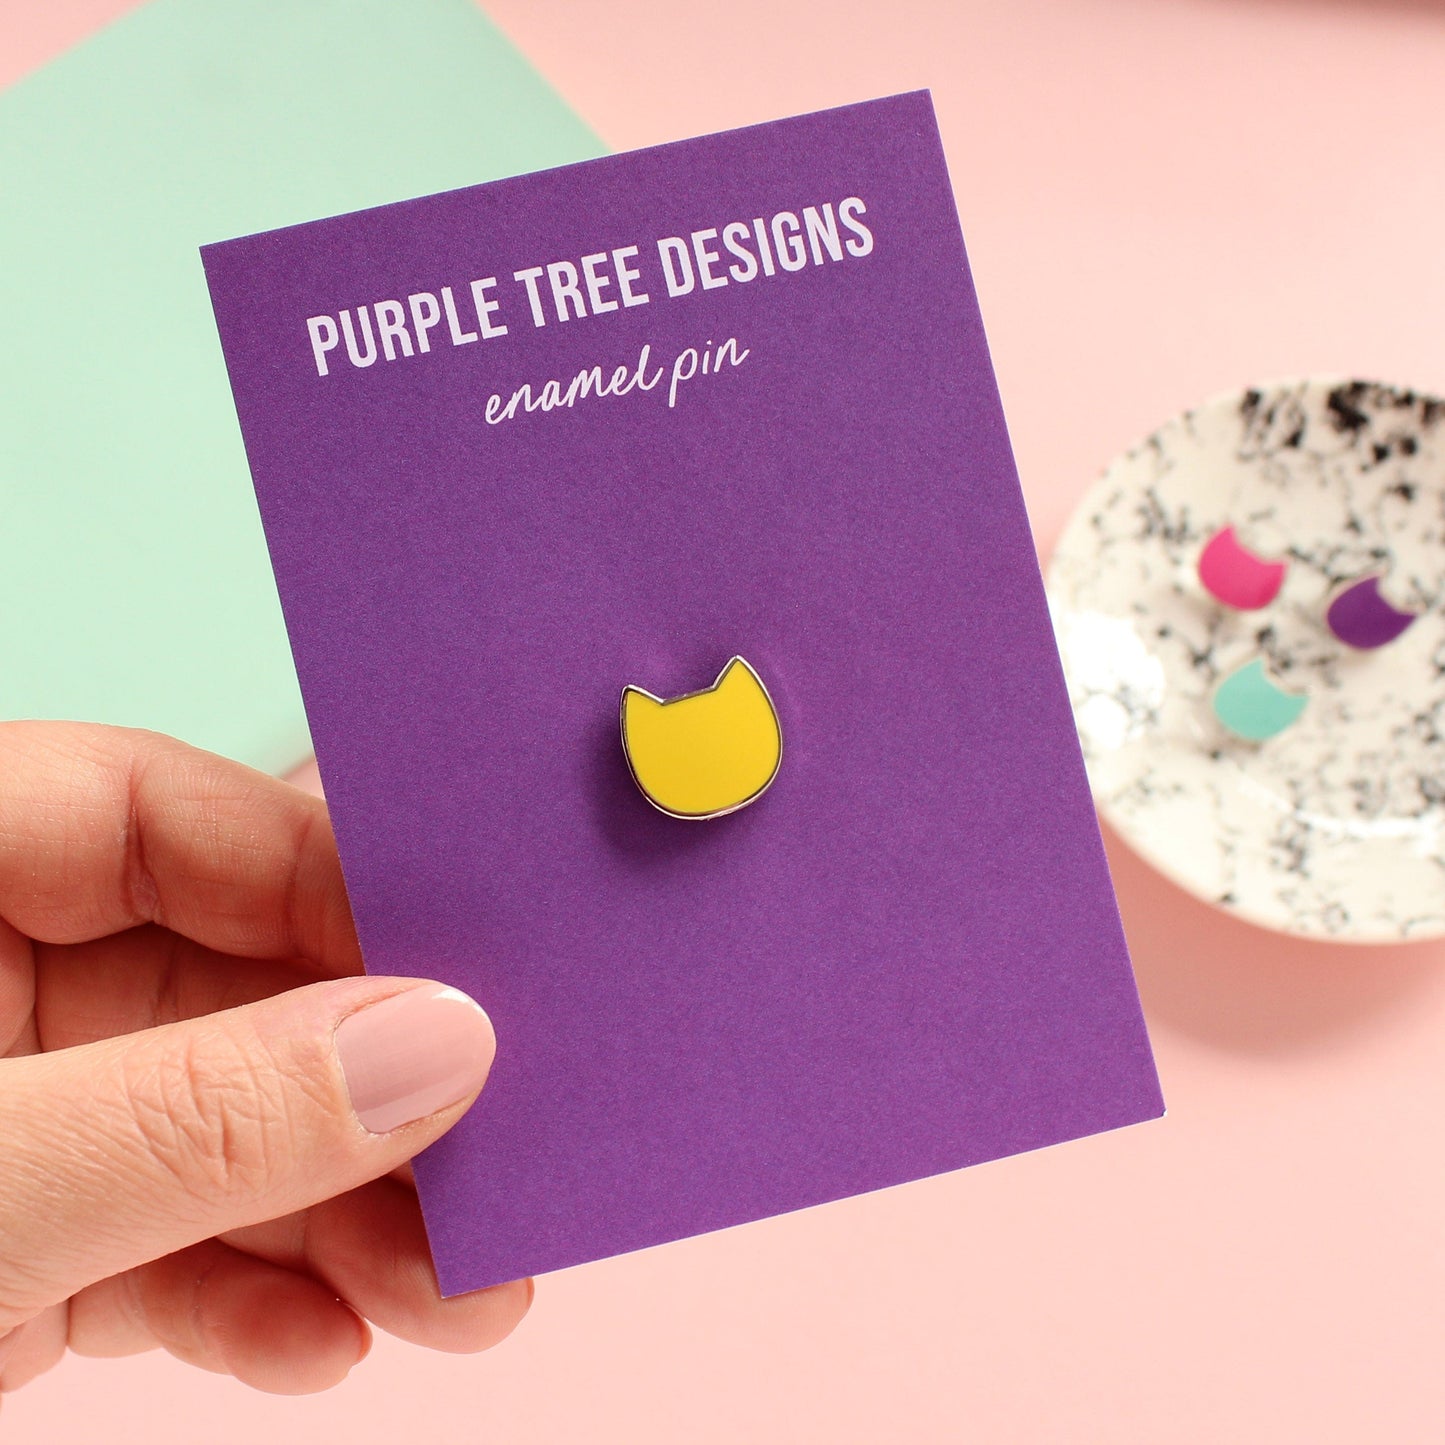 Yellow mini cat pin badge from Purple Tree Designs